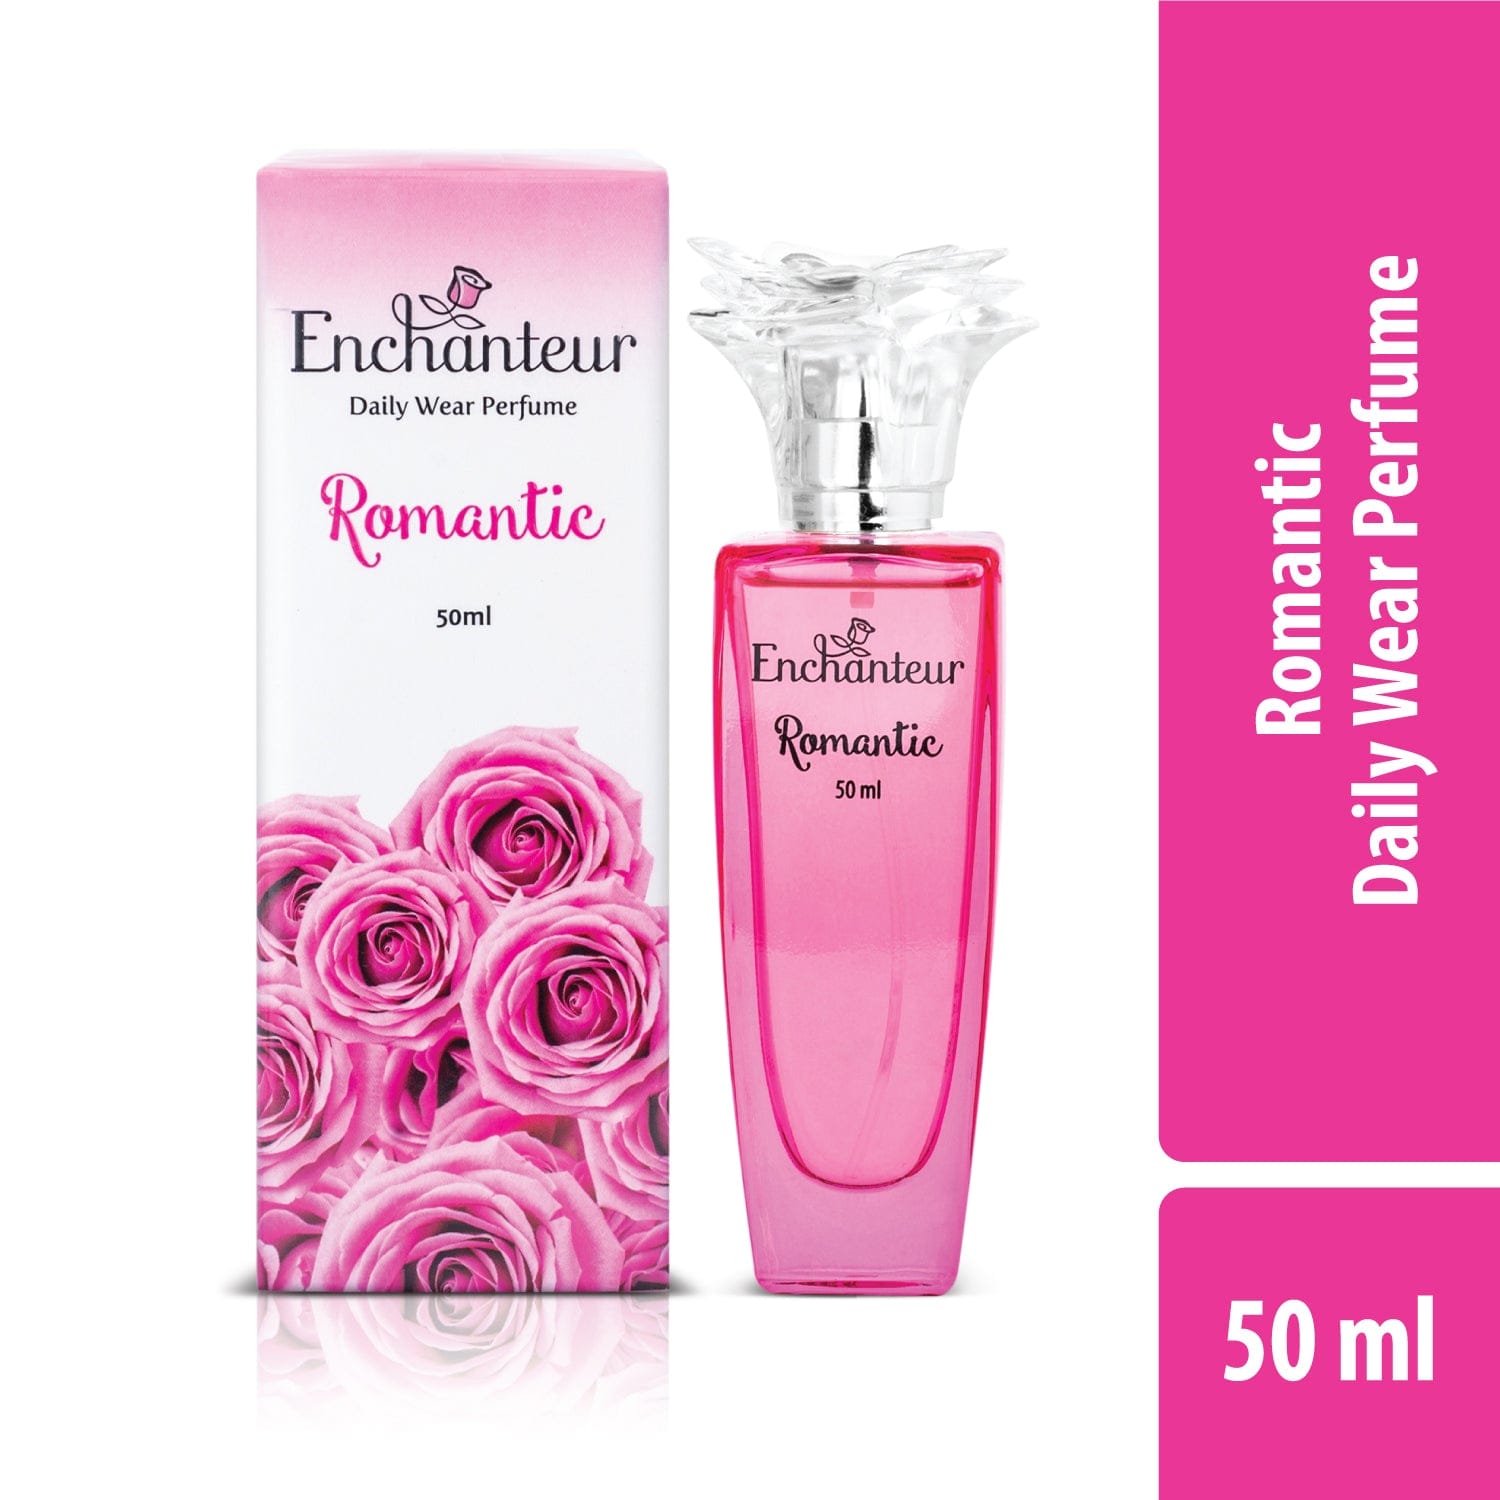 Enchanteur Romantic Daily wear Perfume for Women, 50ml By Enchanteur